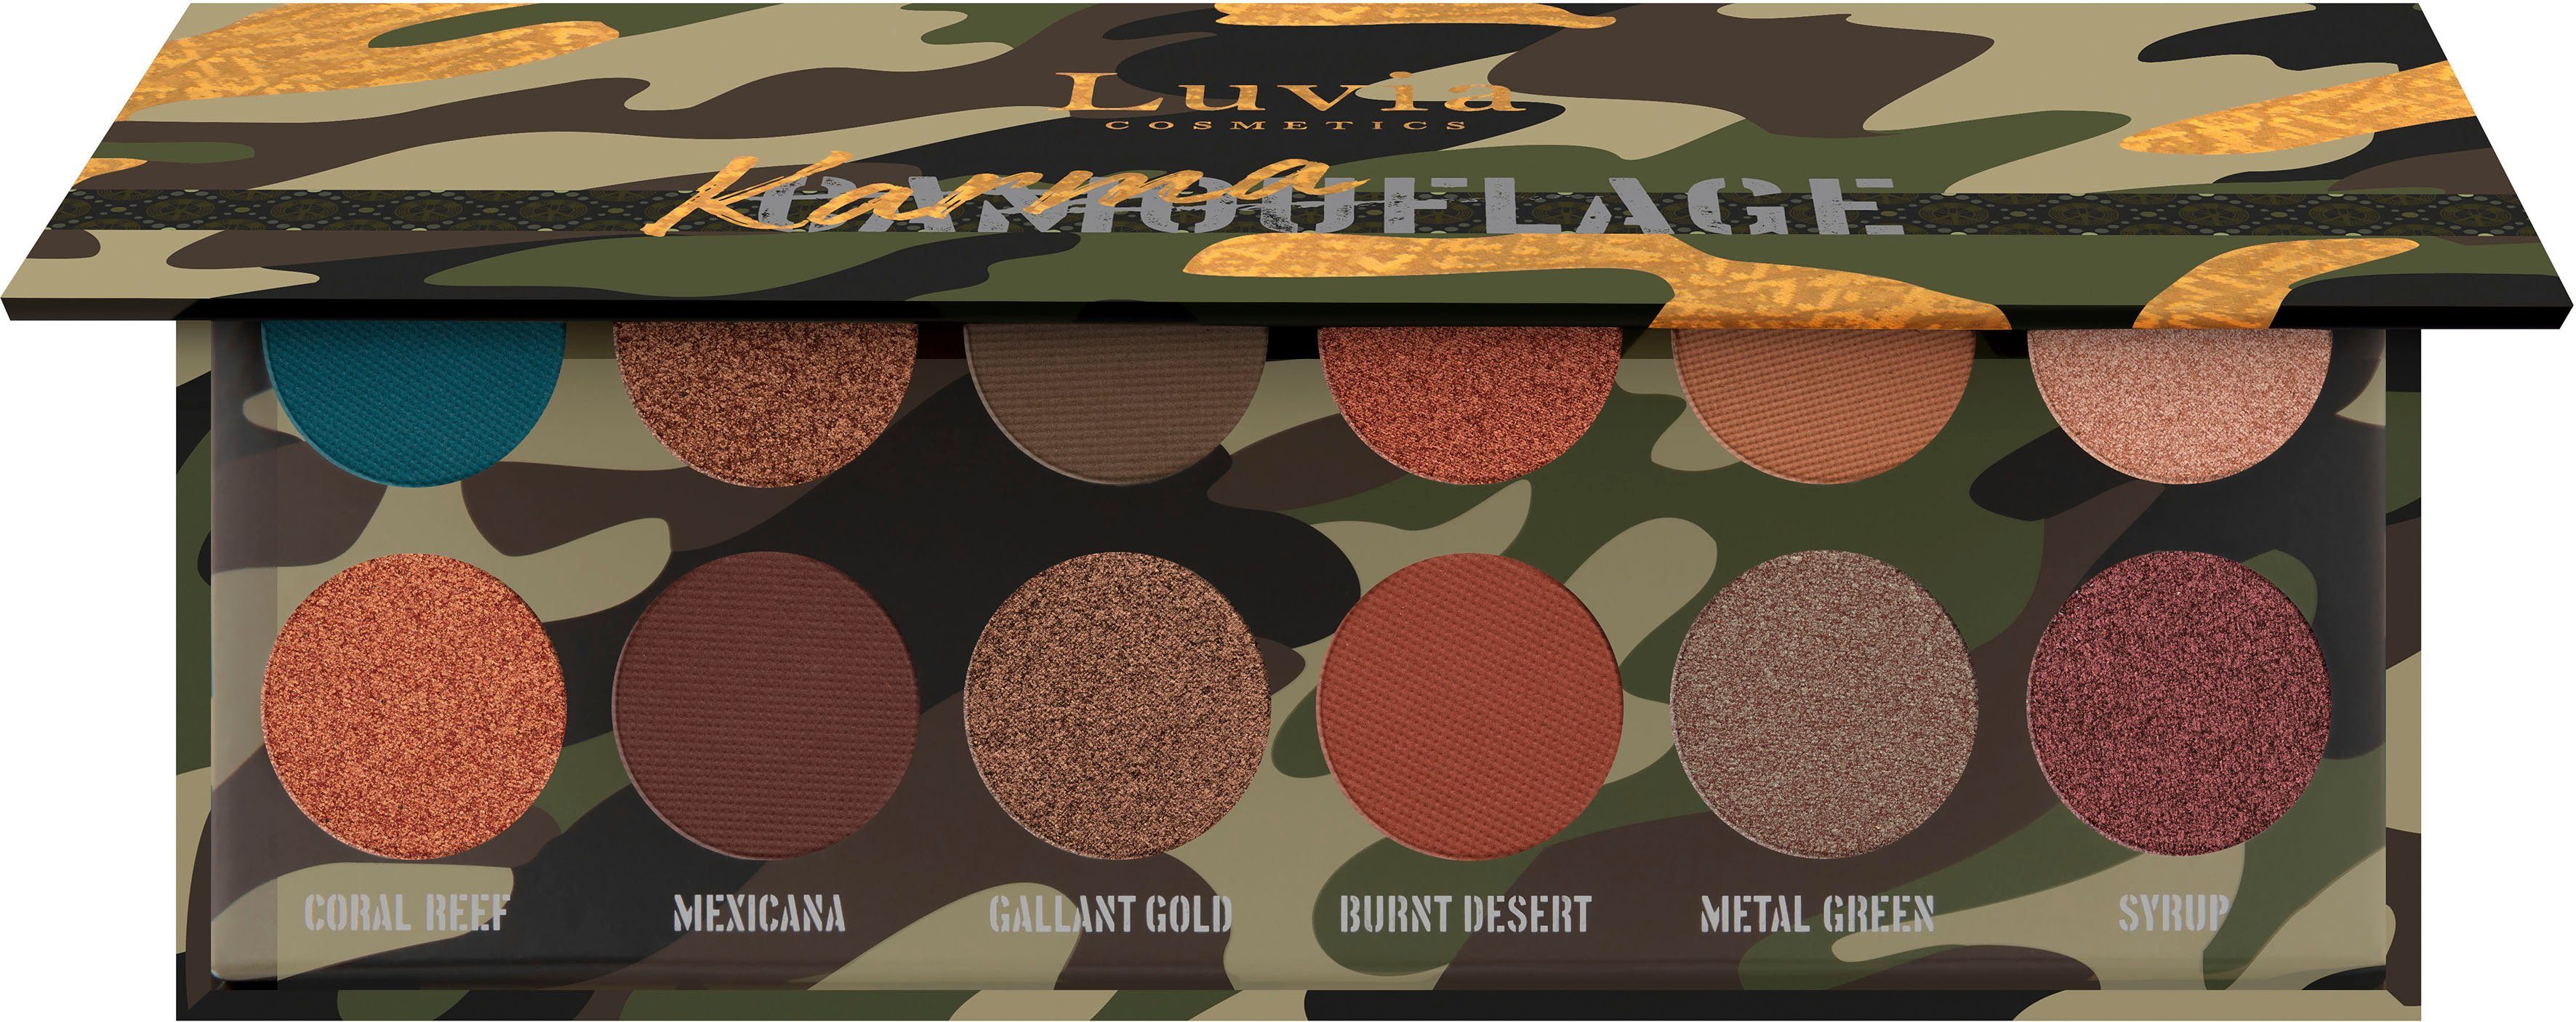 Luvia Cosmetics Lidschatten-Palette Karmaflage grün | Lidschatten